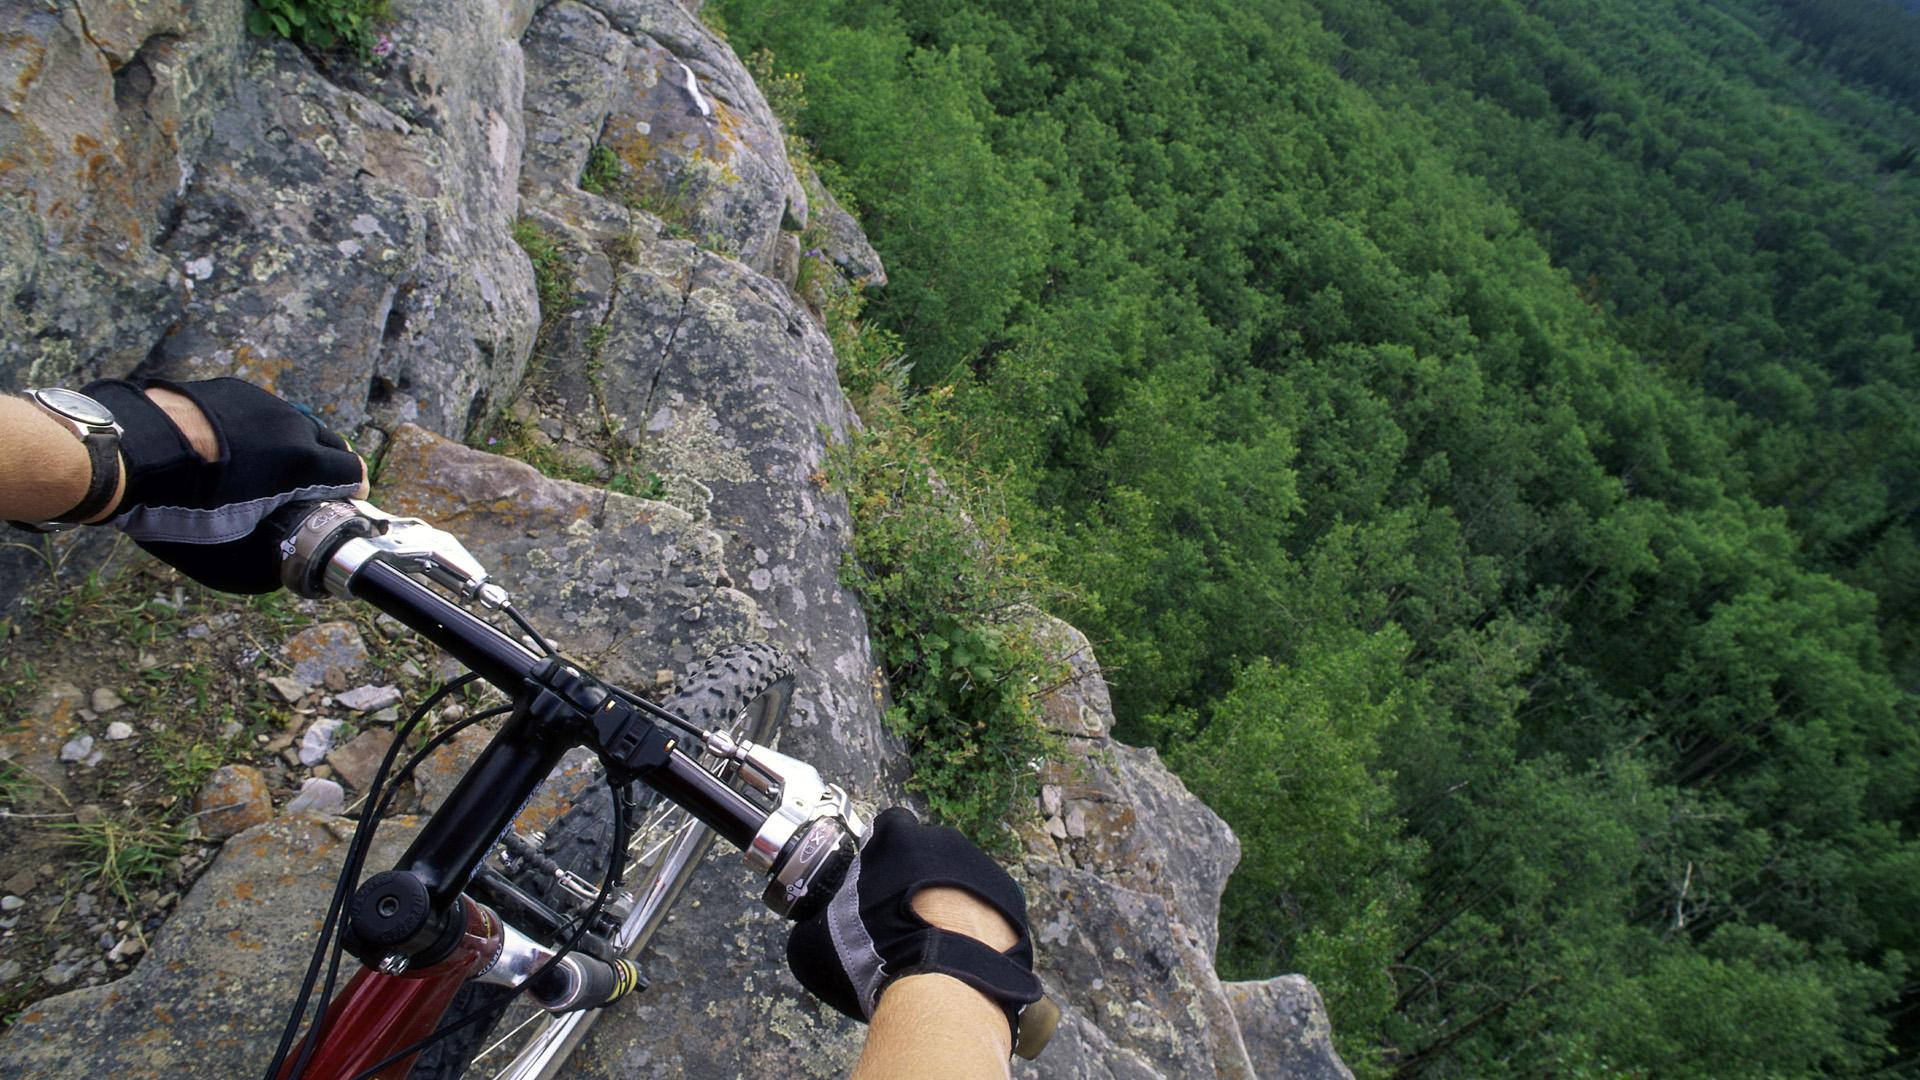 Bike Ride On Steep Cliff Background